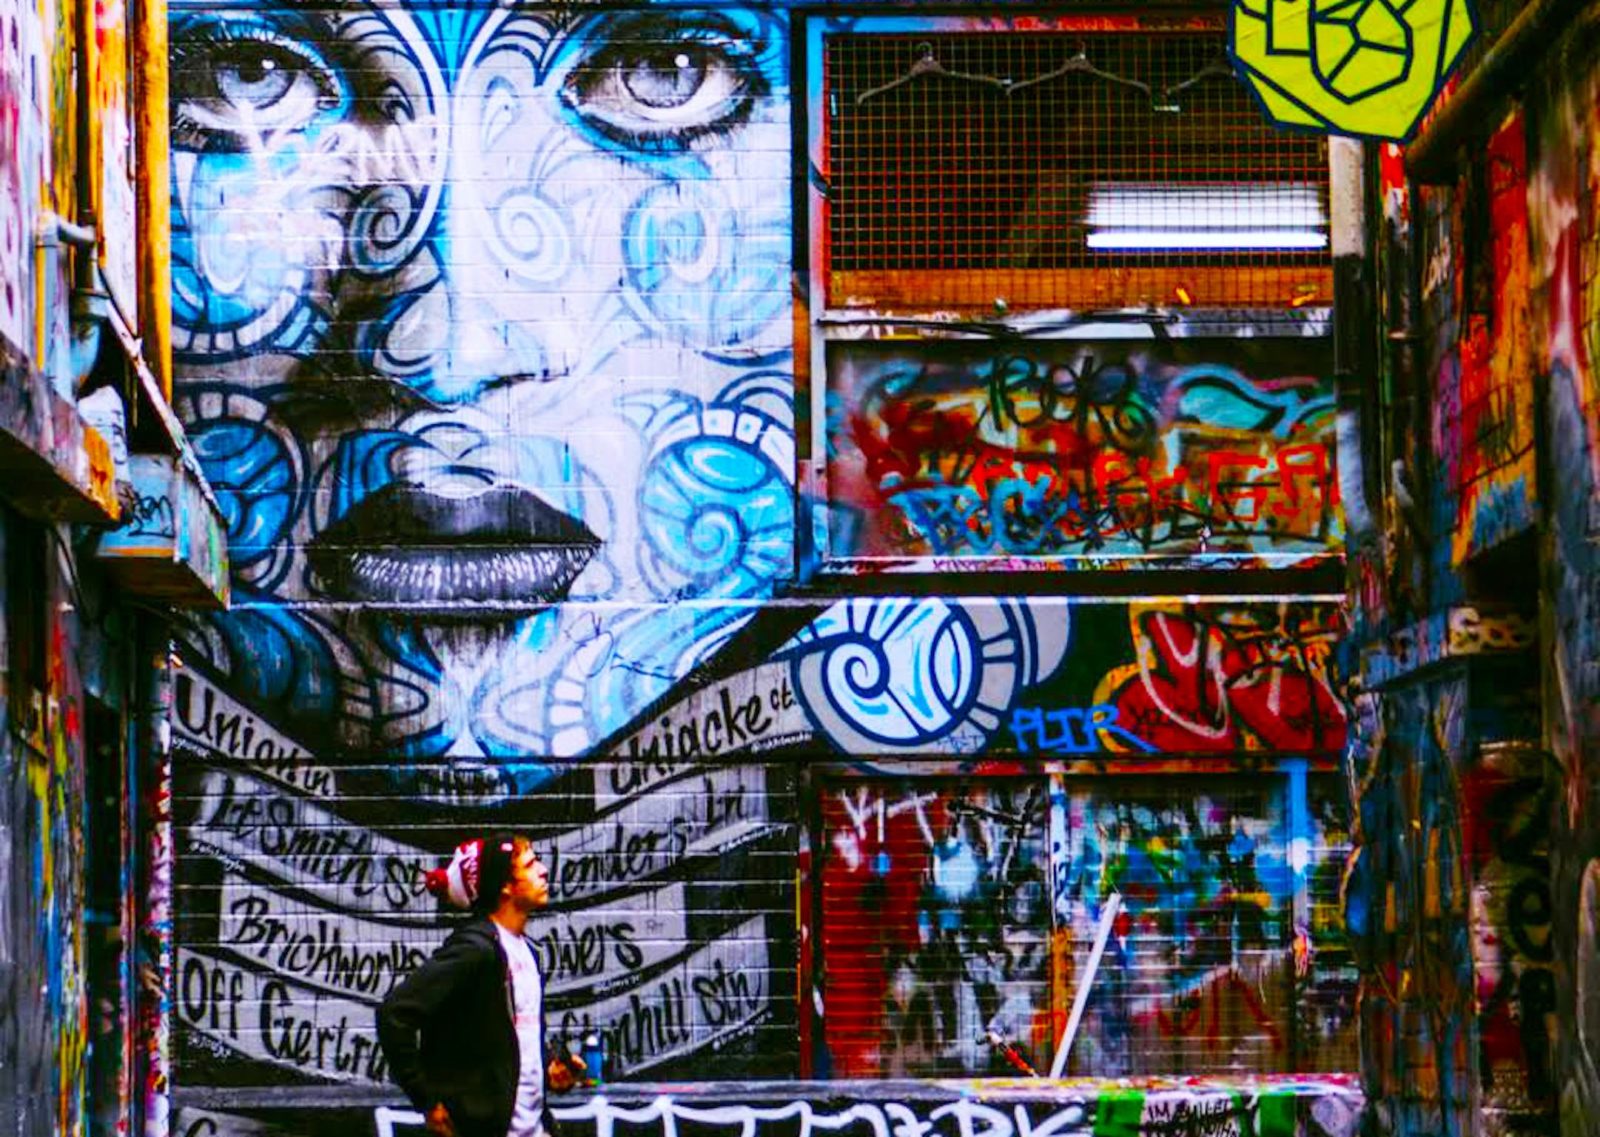 Melbourne street art tours